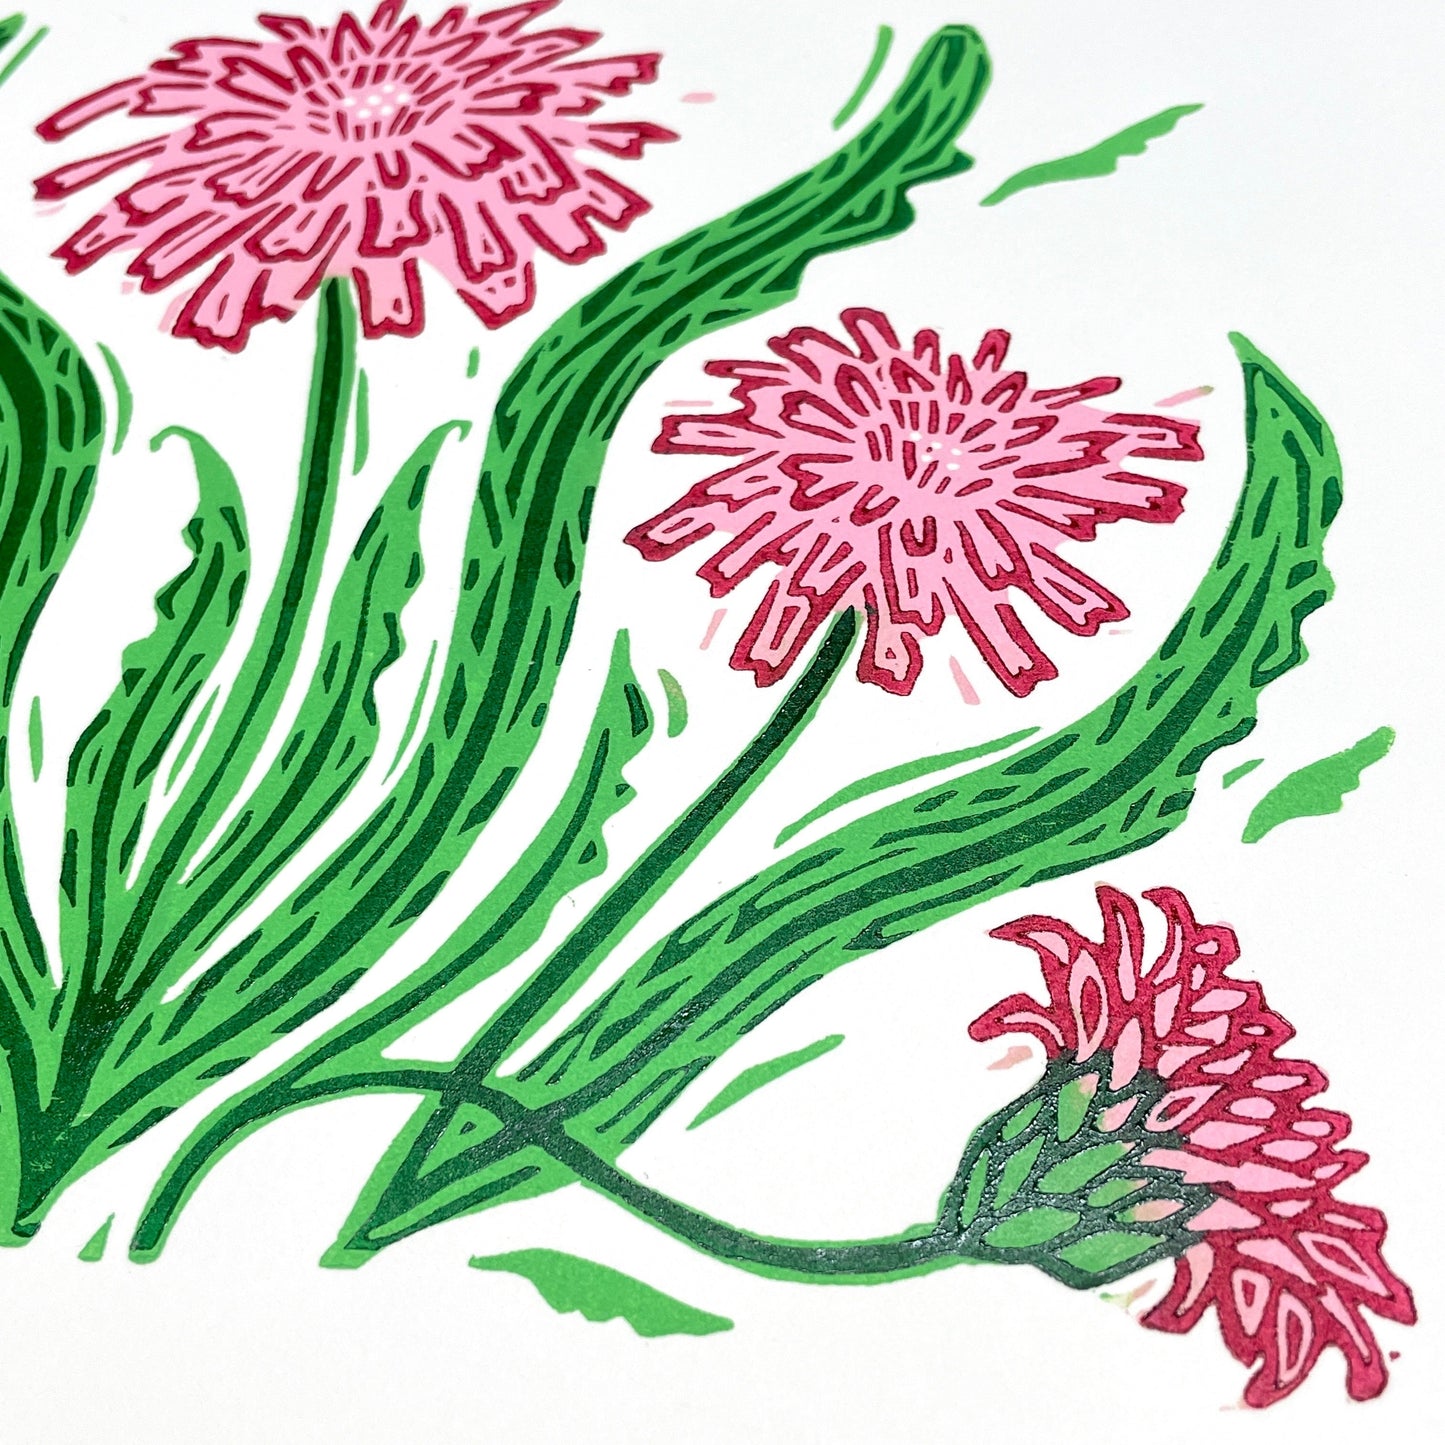 Pink Dandelion FRAMED - woodblock print (11x14")